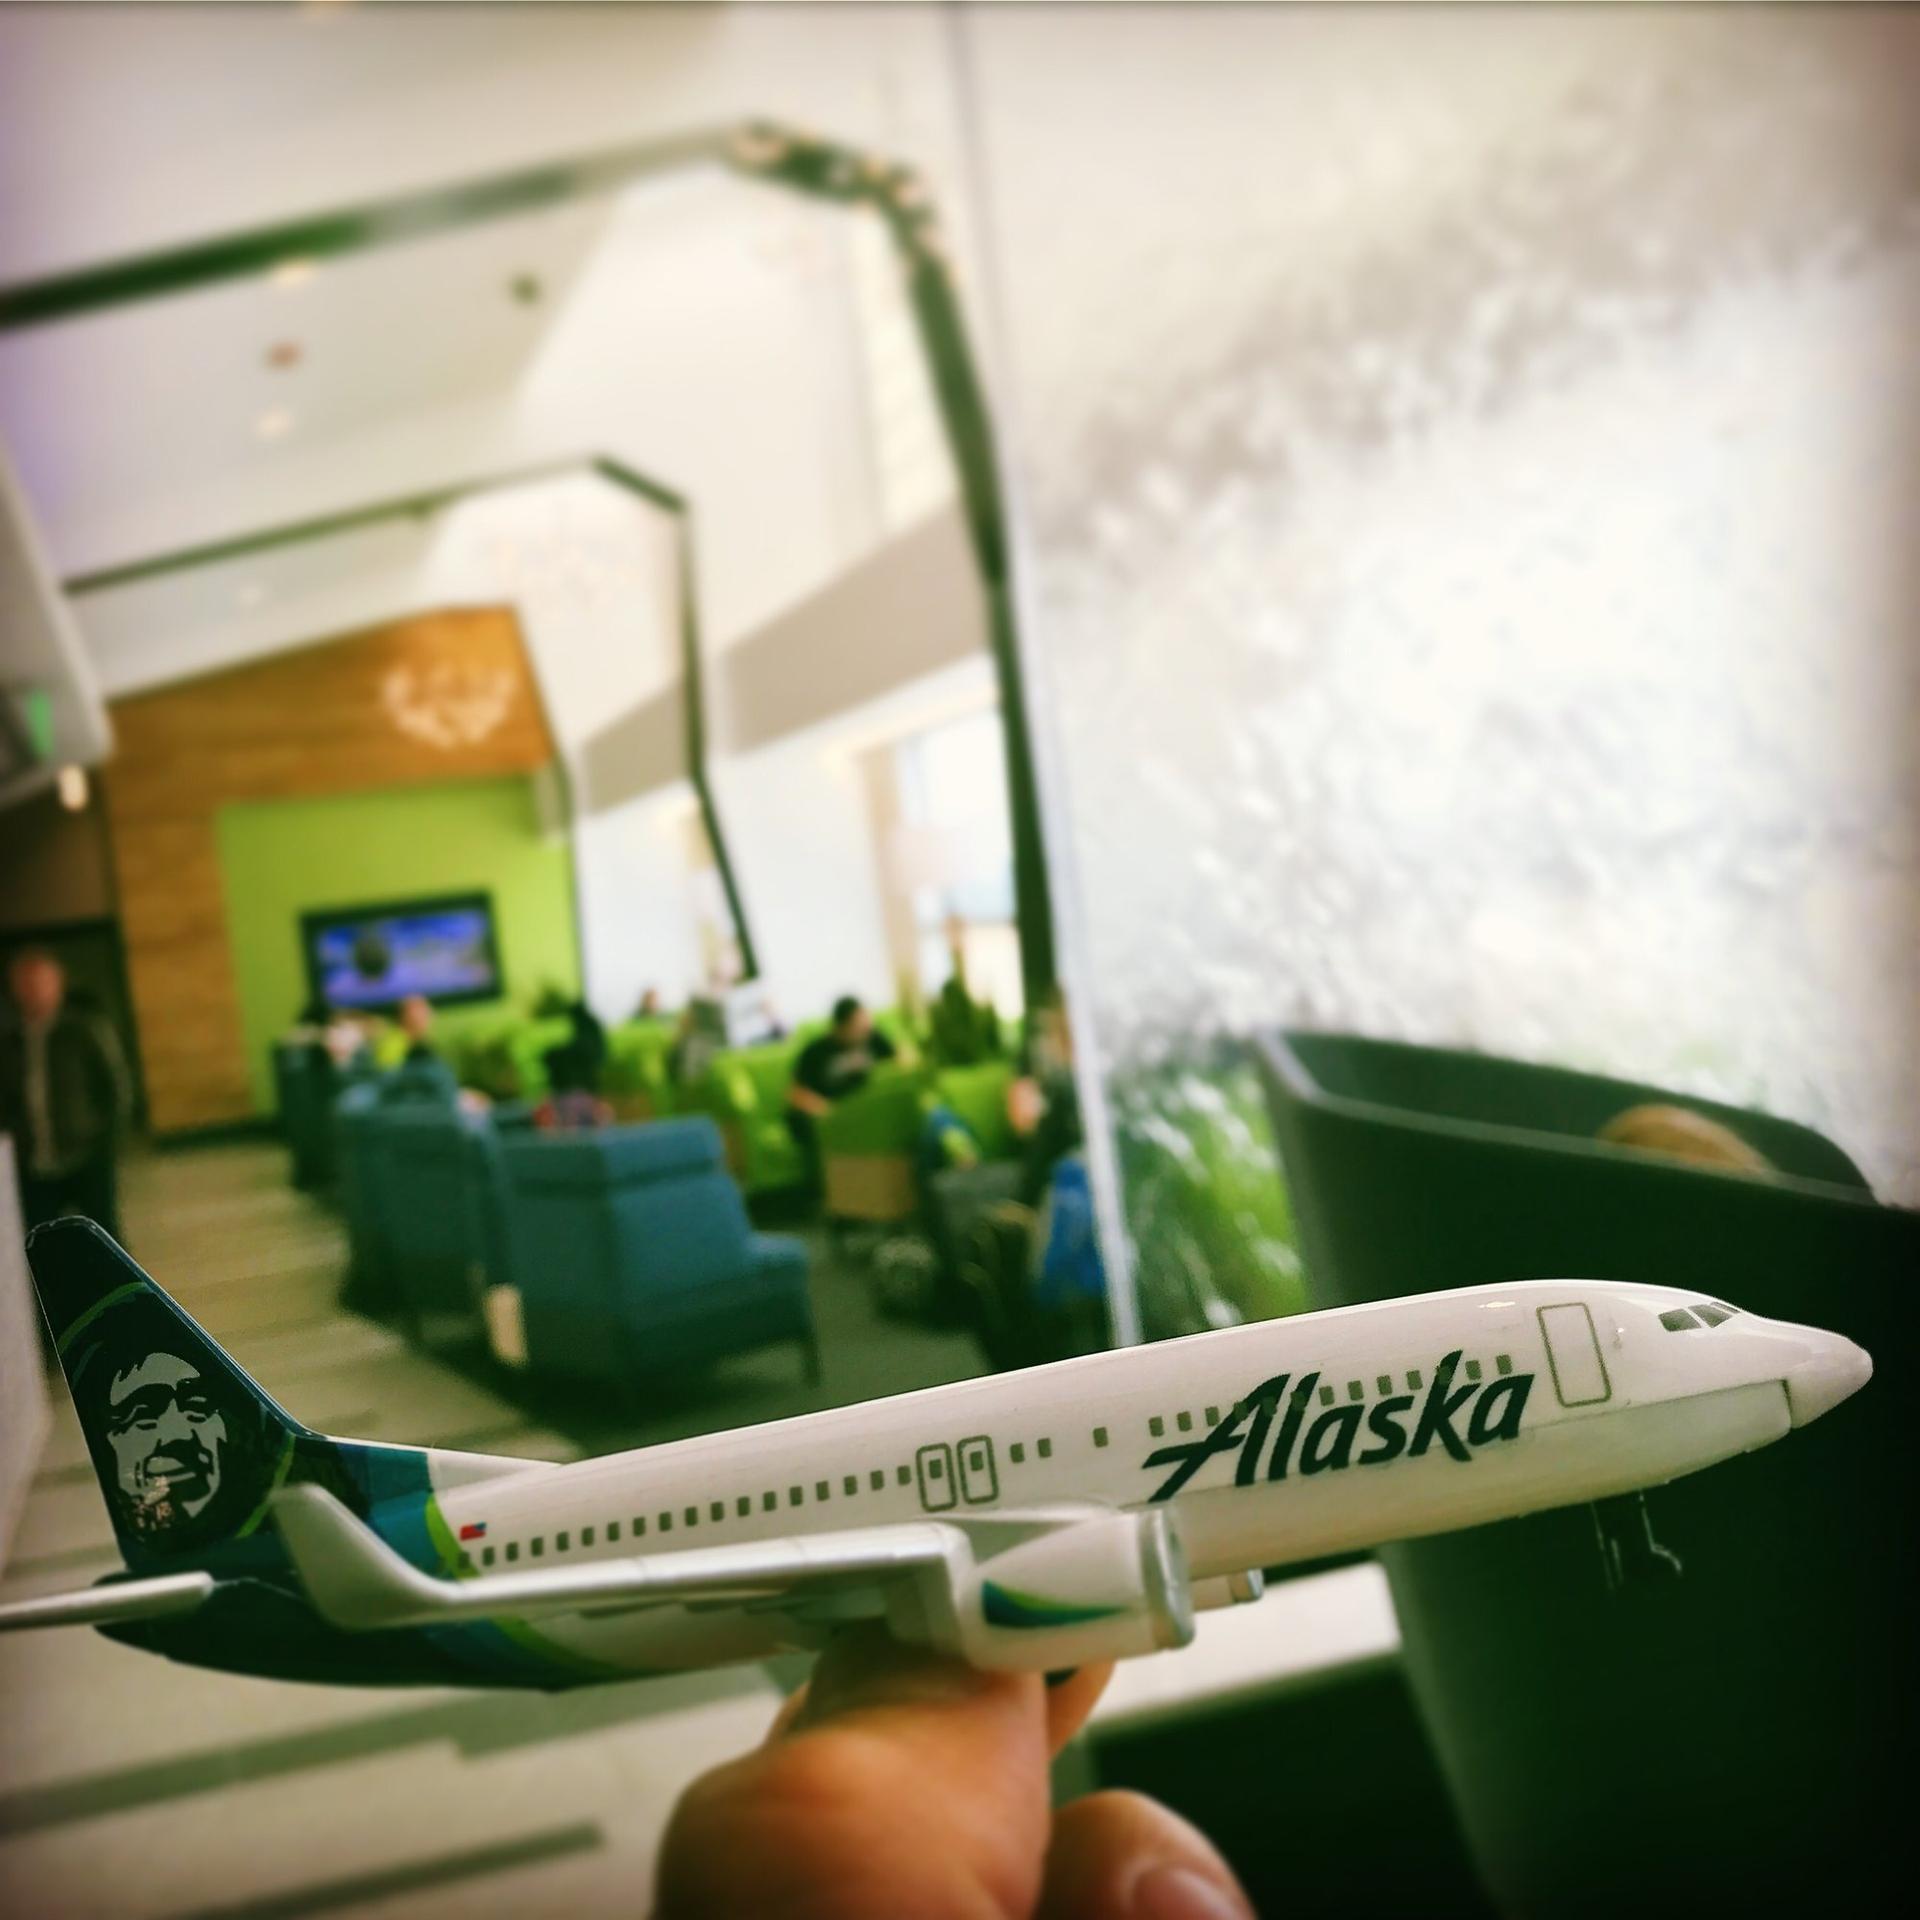 Alaska Airlines Alaska Lounge image 35 of 36